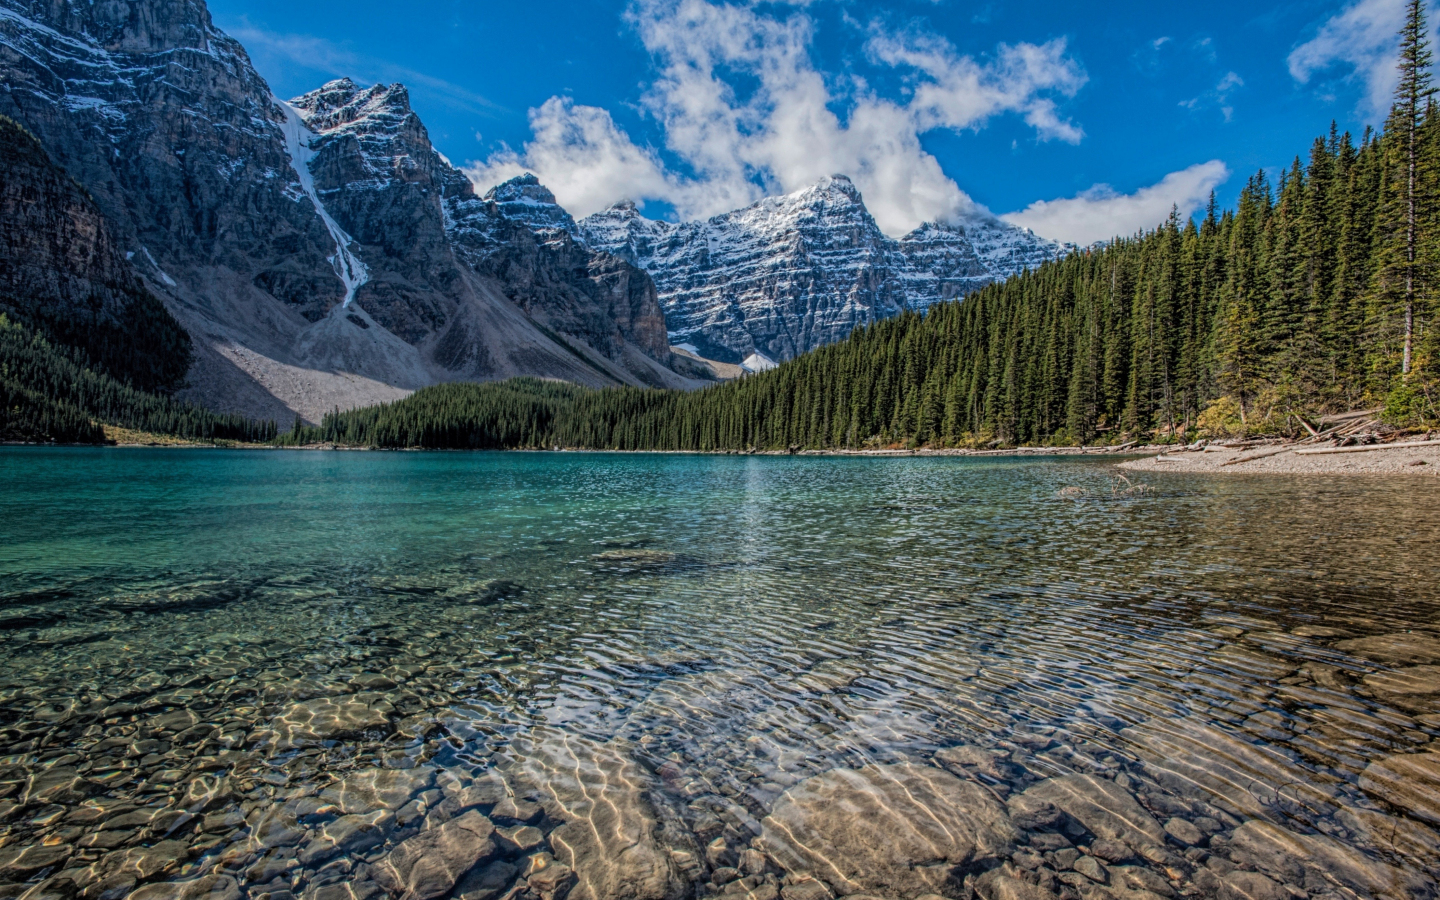 Download clean lake, mountains range, trees, nature 1440x900 wallpaper, widescreen 16:10 wallpaper, 1440x900 hd background, 2153